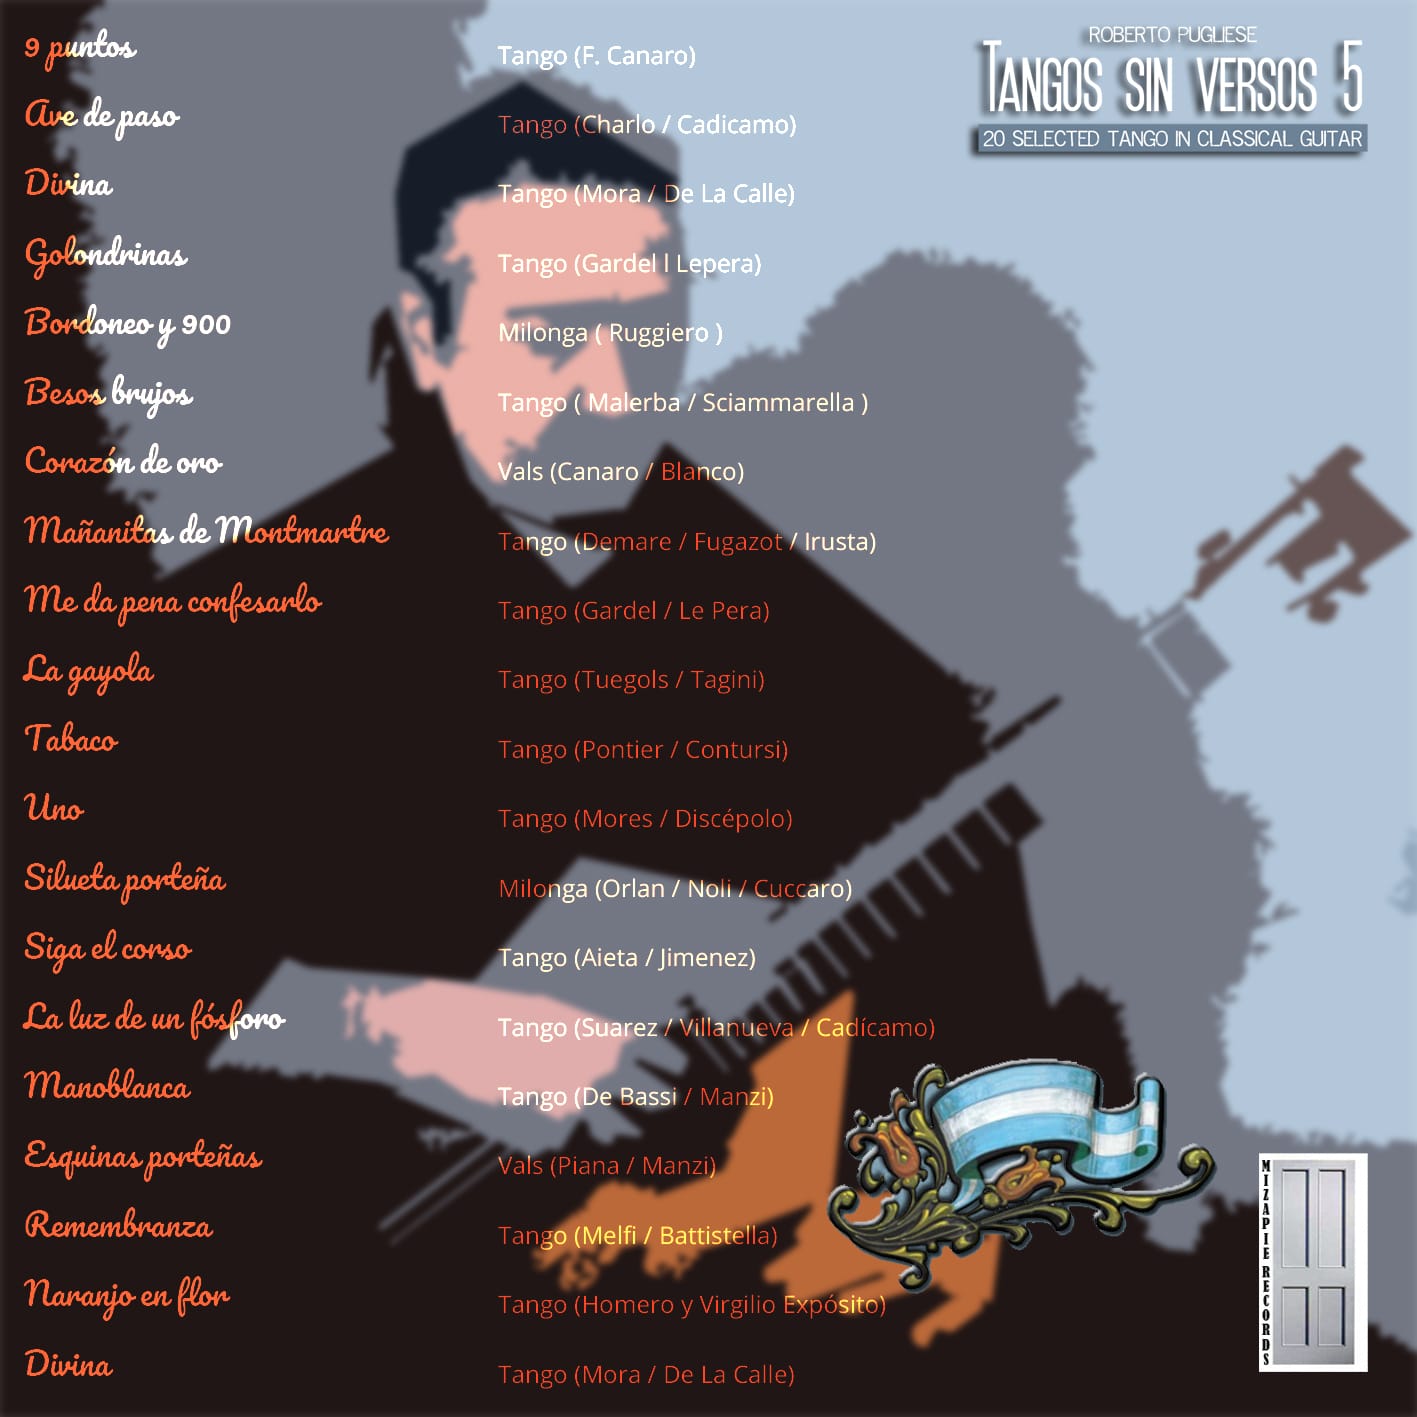 Tangos sin versos 5 💿 20 tracks de tango instrumentales en guitarra